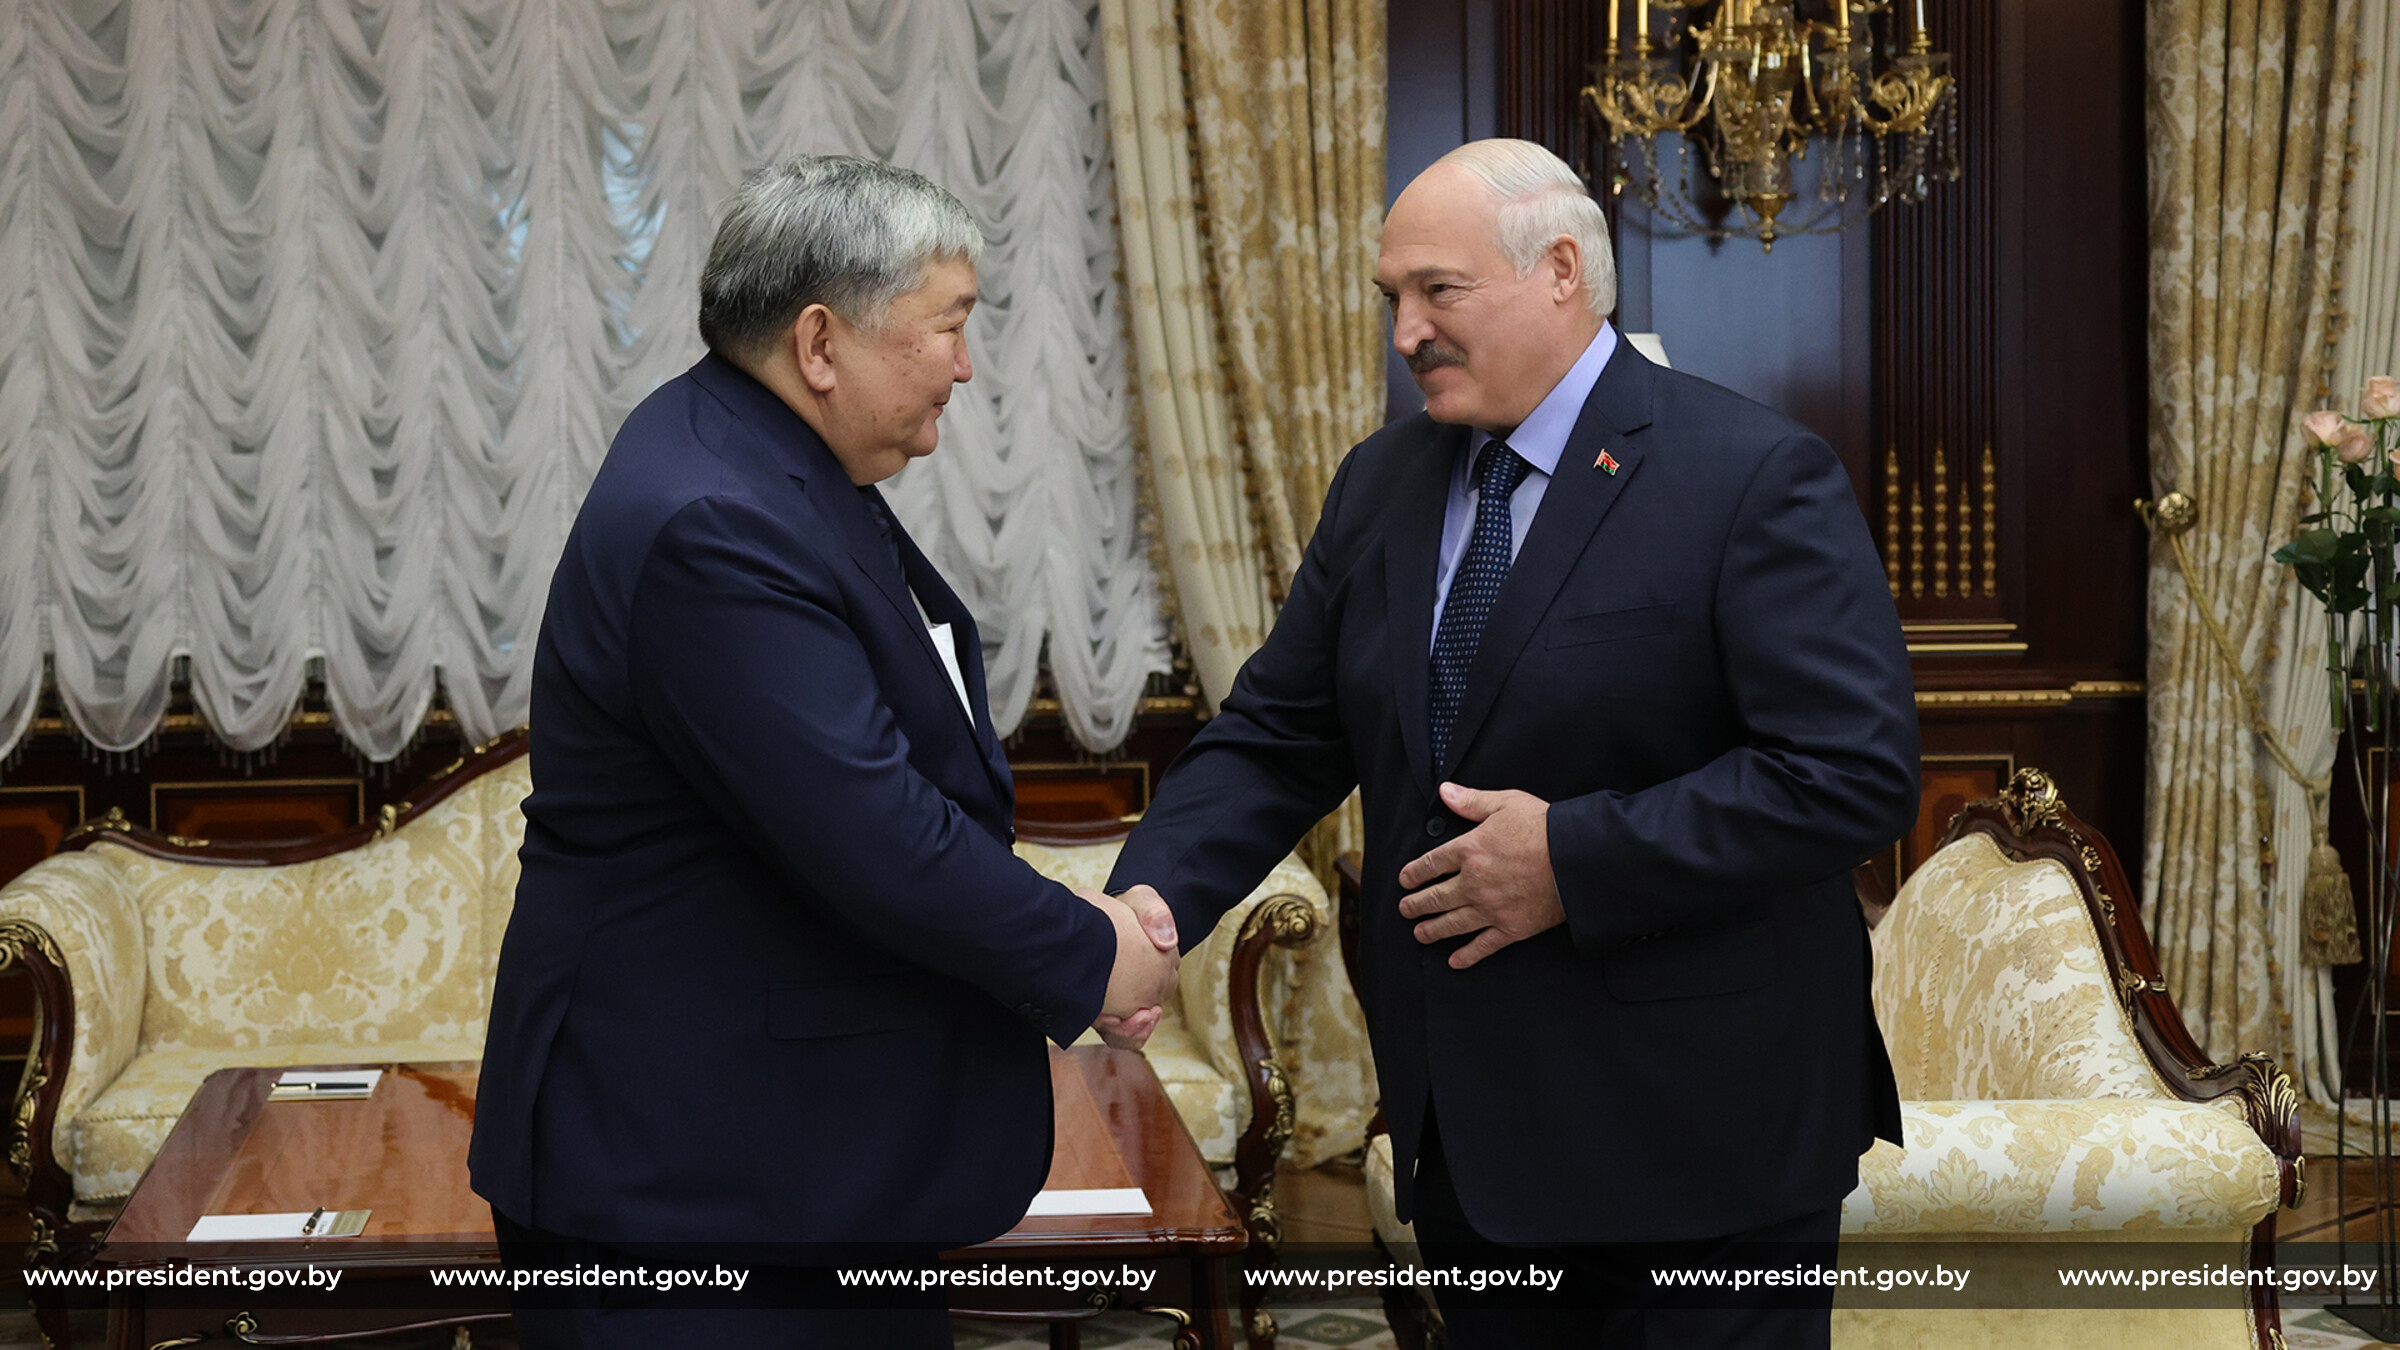 Лукашенко — о товарообороте с КР: "$170 млн между странами — ничто" (видео)